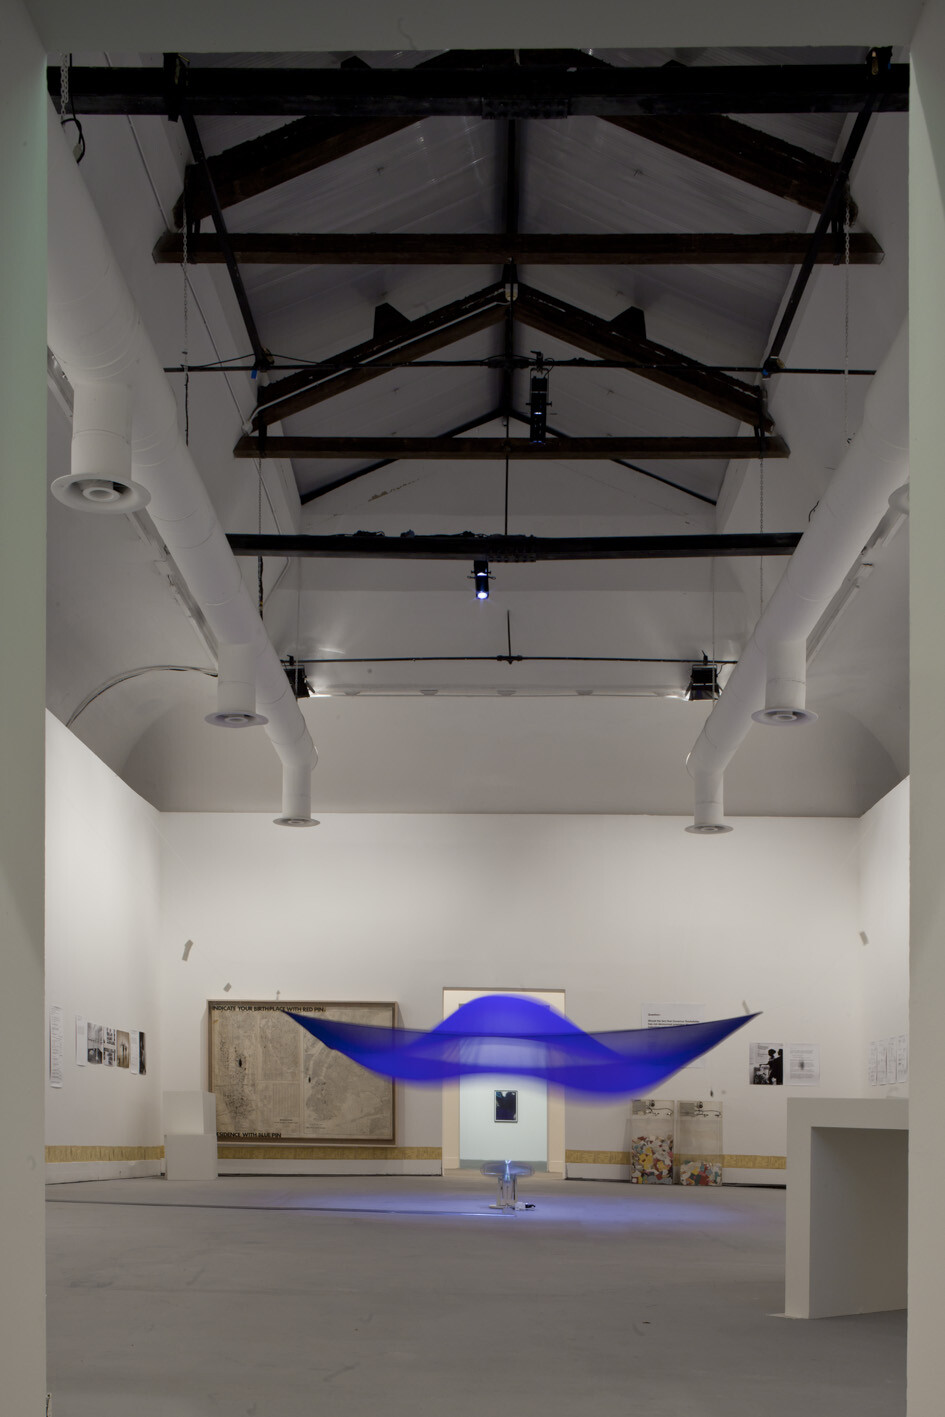 e-flux journal 56th Venice Biennale – SUPERCOMMUNITY – Mercury